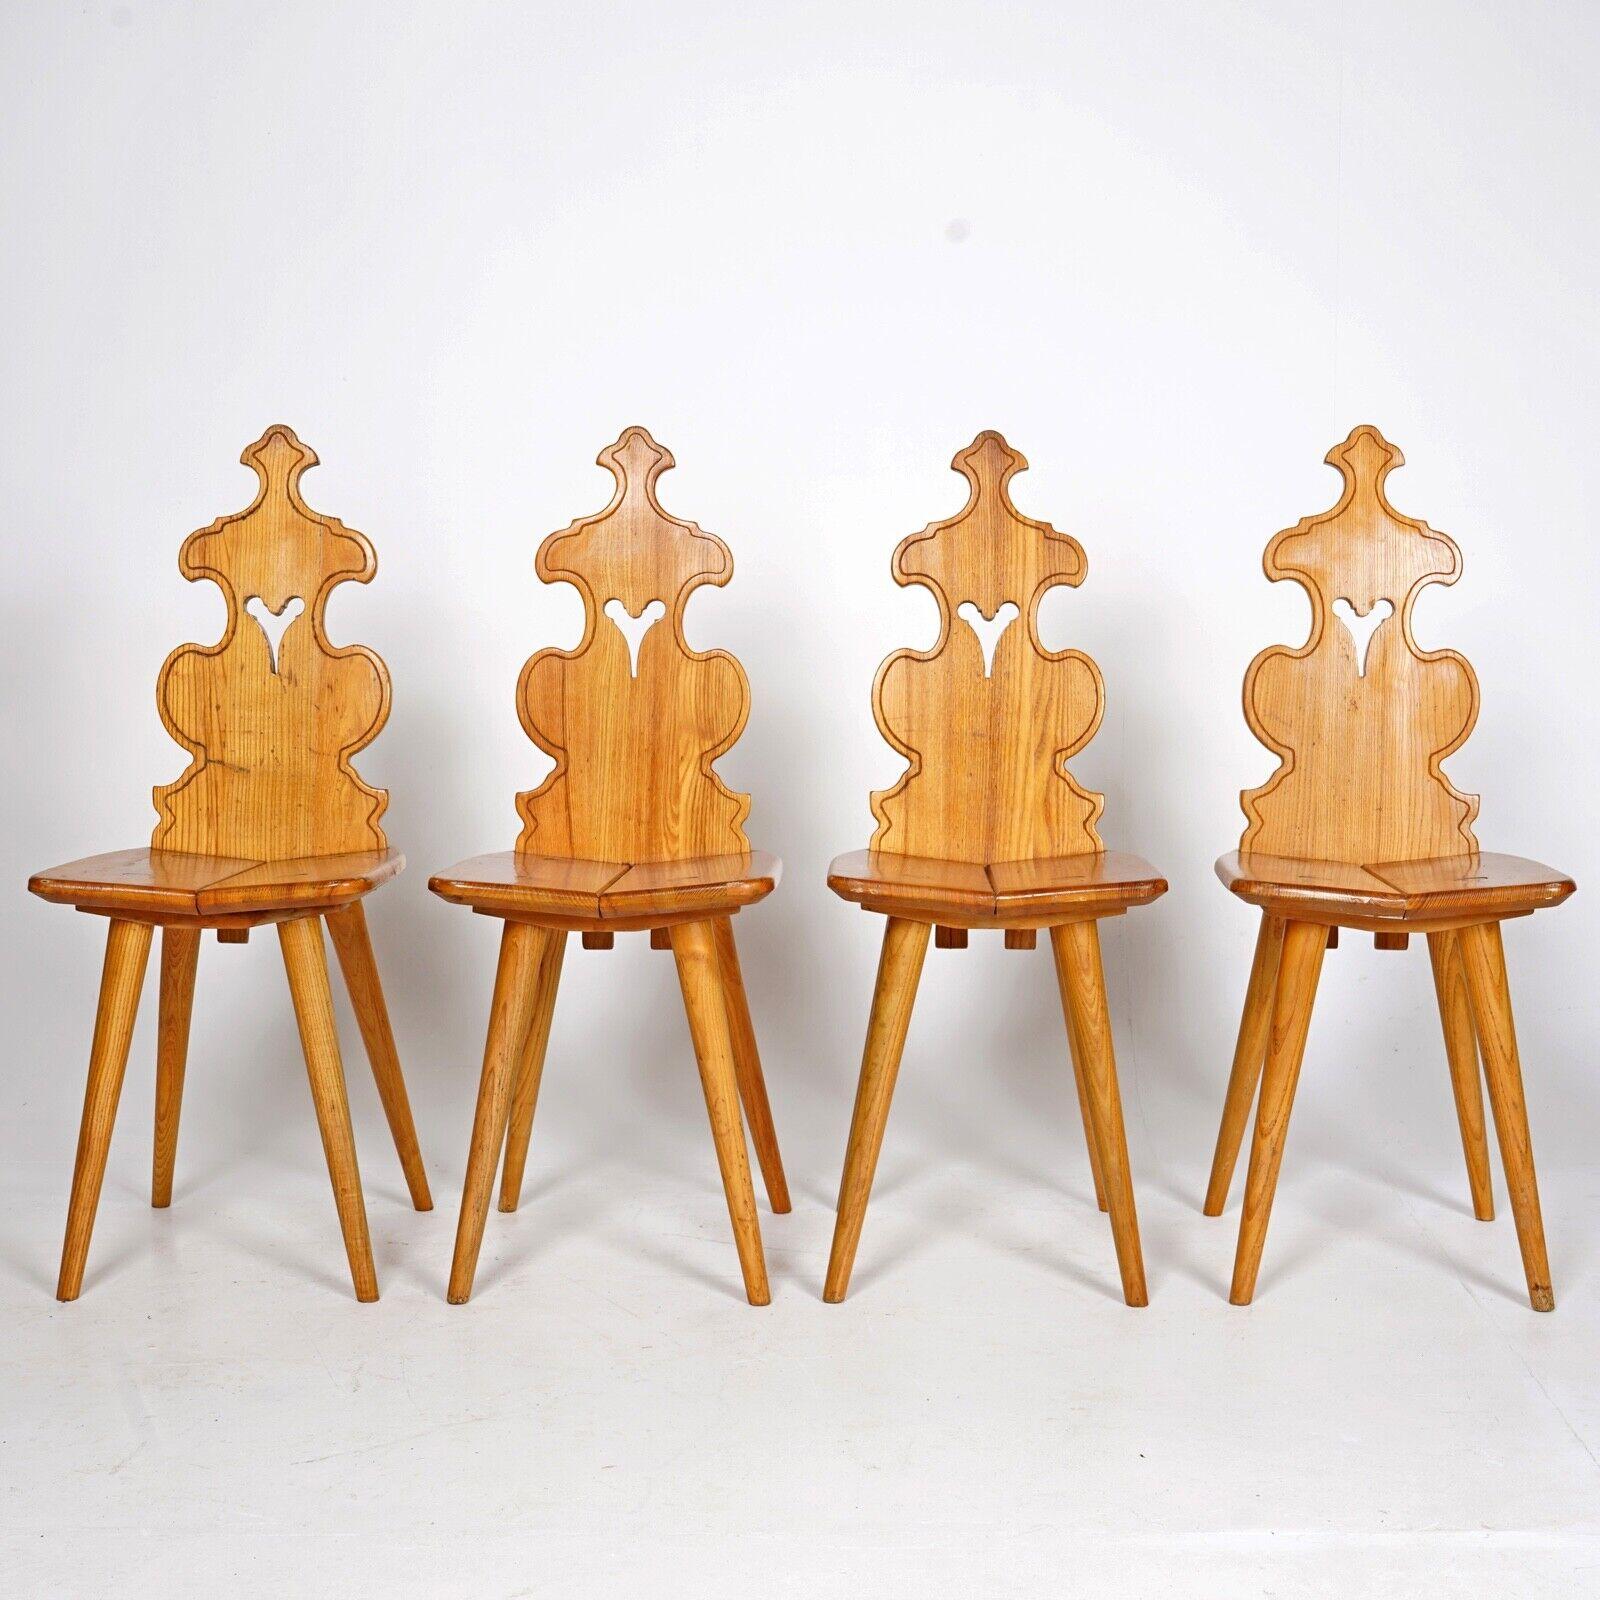 20th Century Midcentury Brutalist Style Design Tiroler Chair Set of 4 by Cepelia, 1960